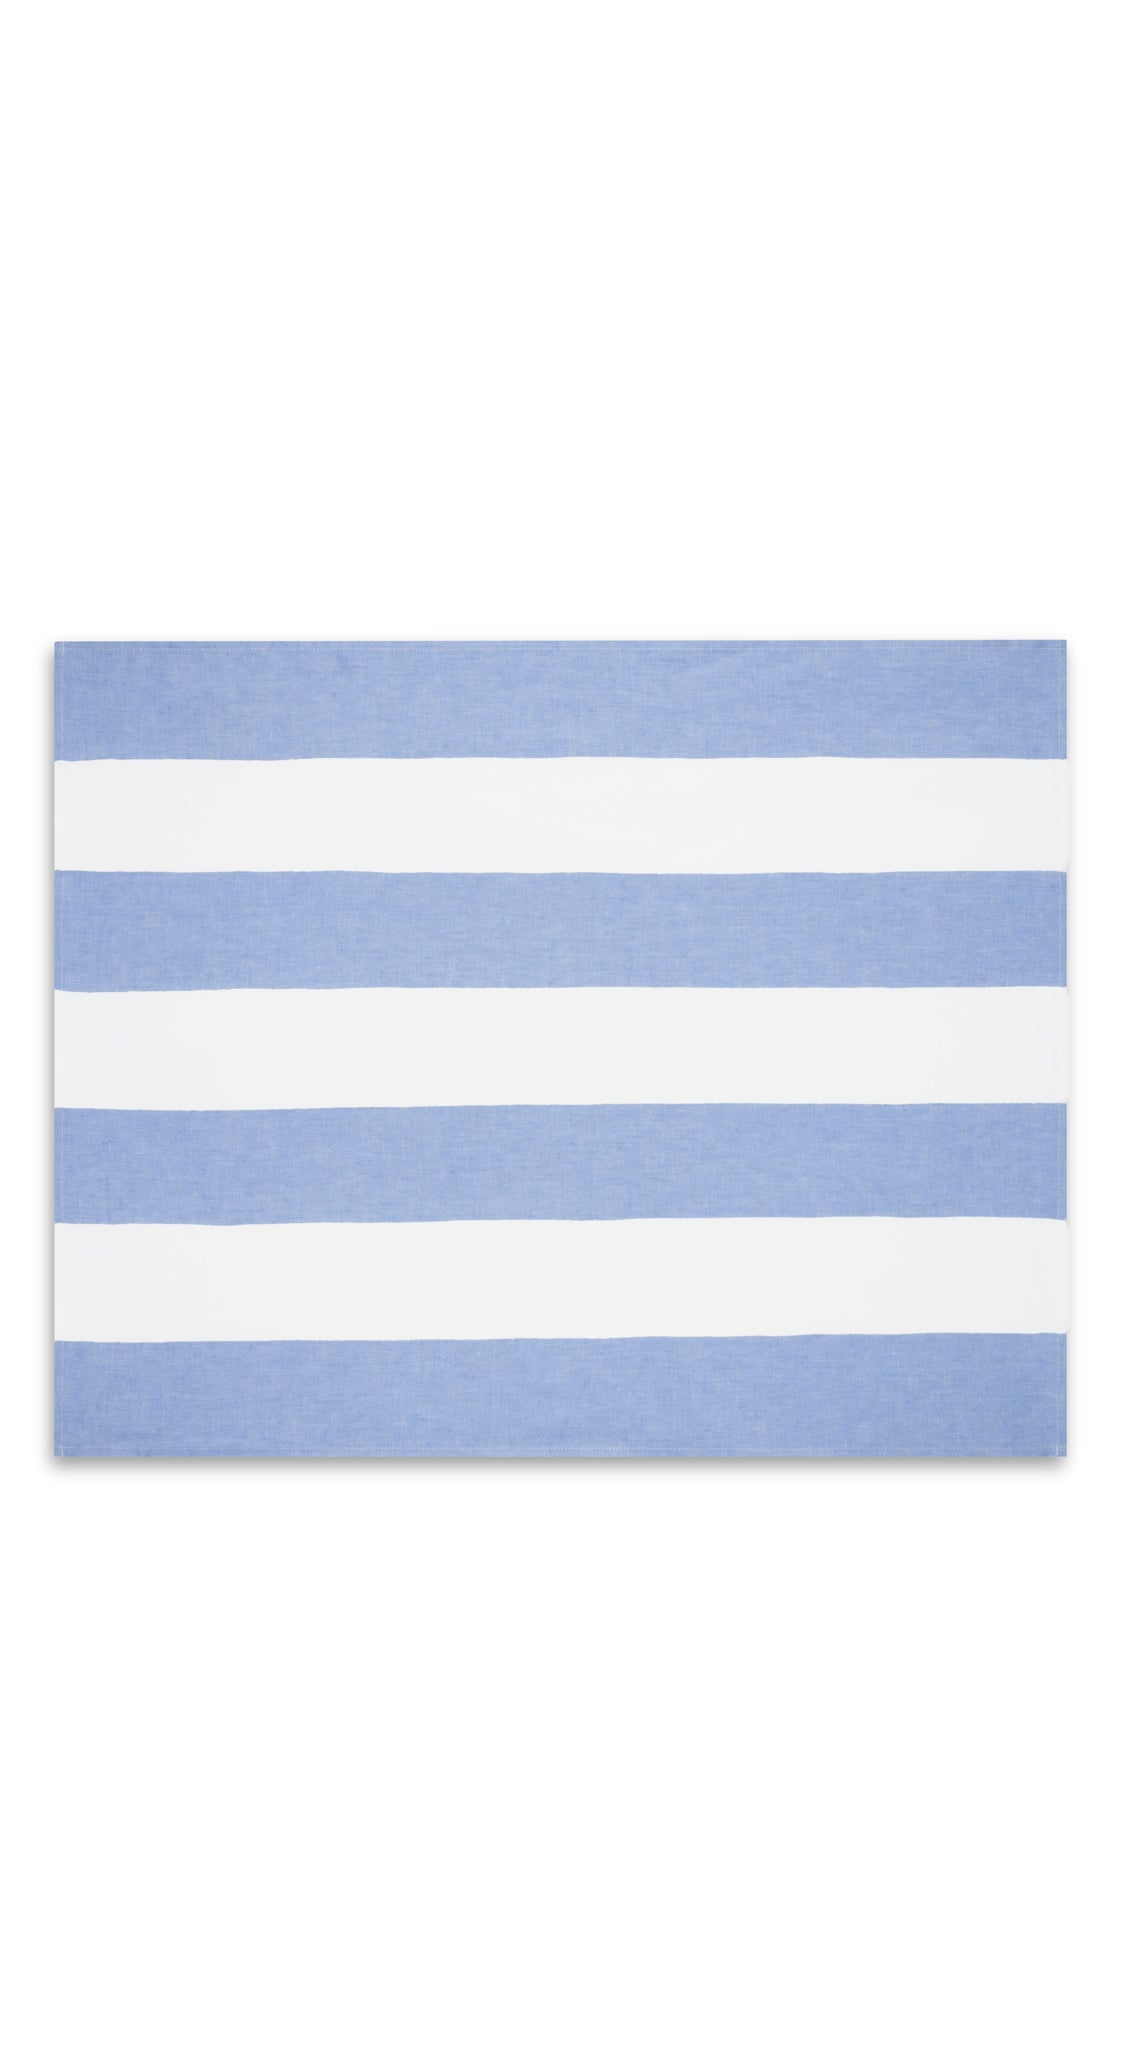 Fine Irish Linen Tea Towel in Blue and White Stripe, 58x73cm